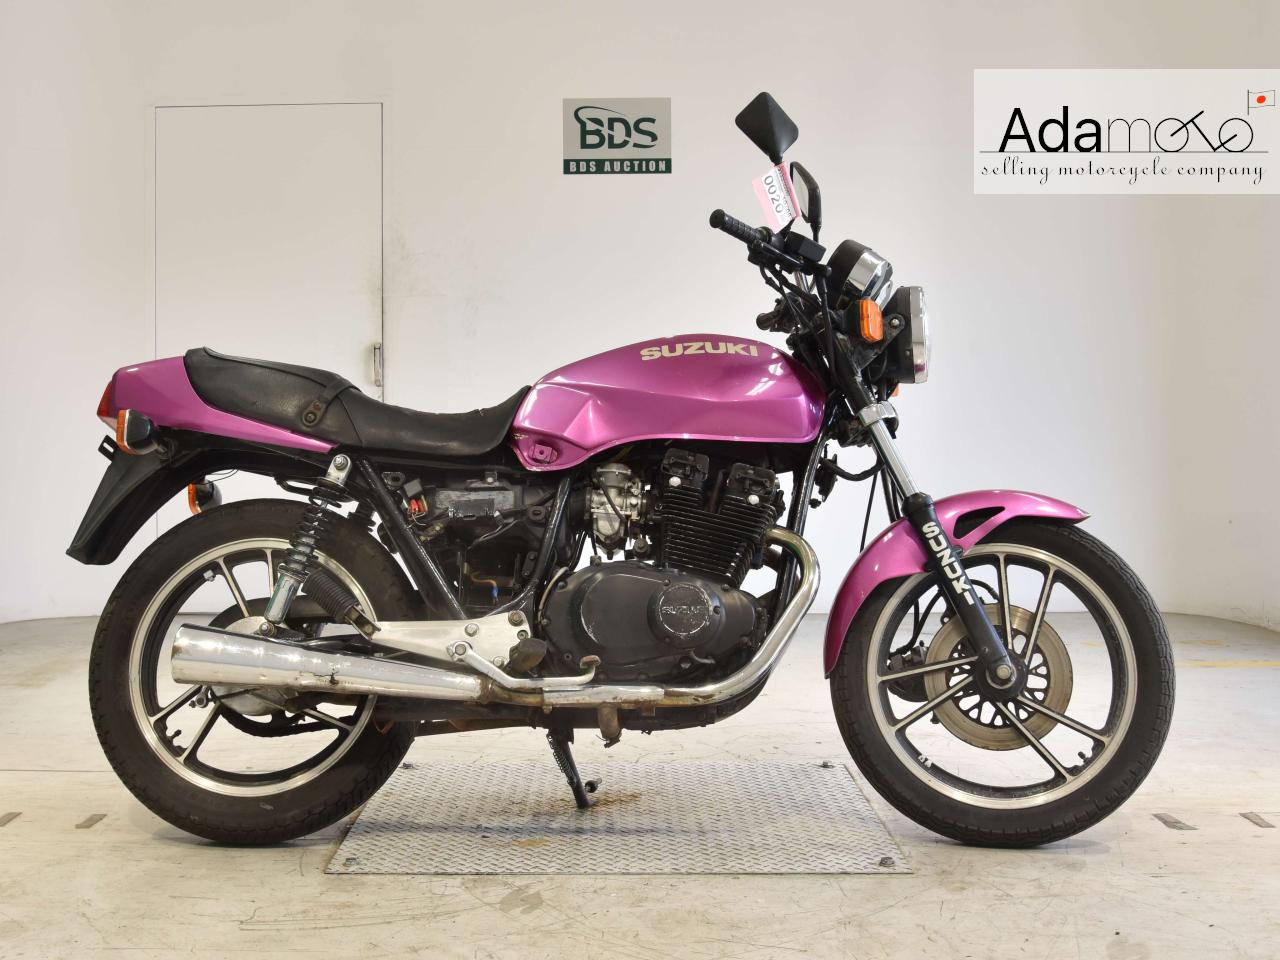 Suzuki GSX400E - Adamoto - Motorcycles from Japan